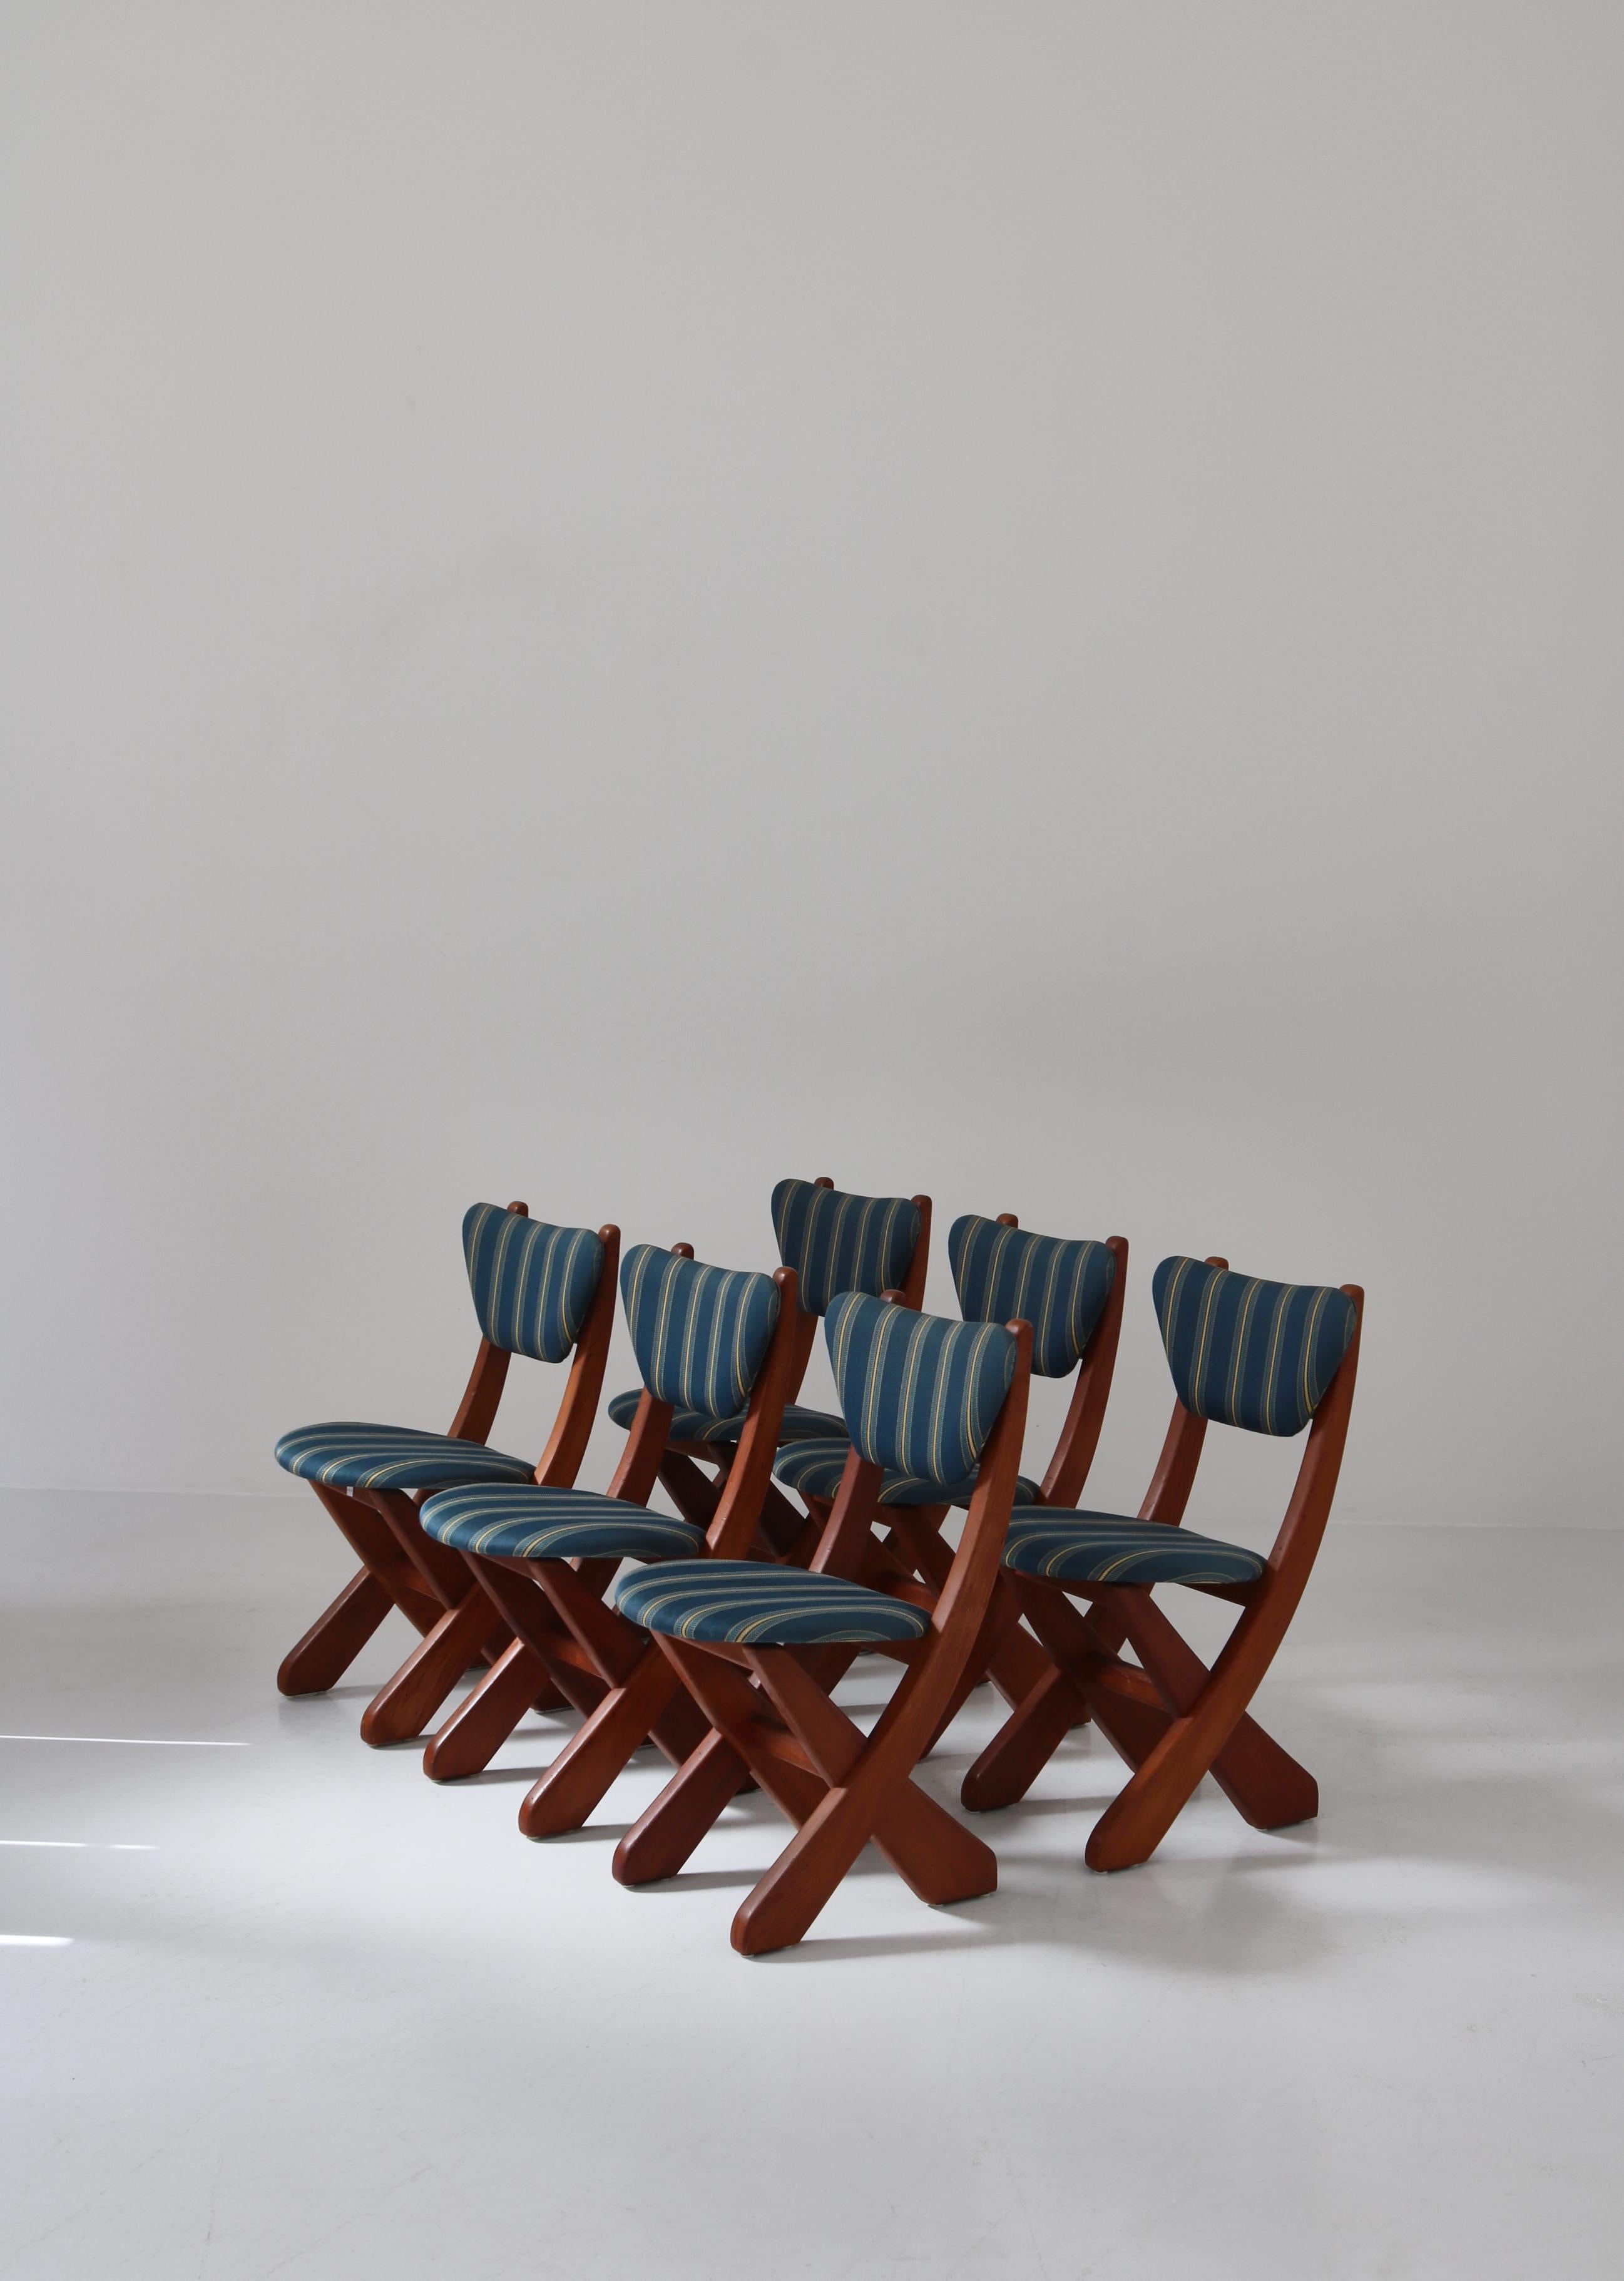 Danish Set of 6 Scandinavian Modern Pinewood Dining Chairs, Denmark, 1960s For Sale